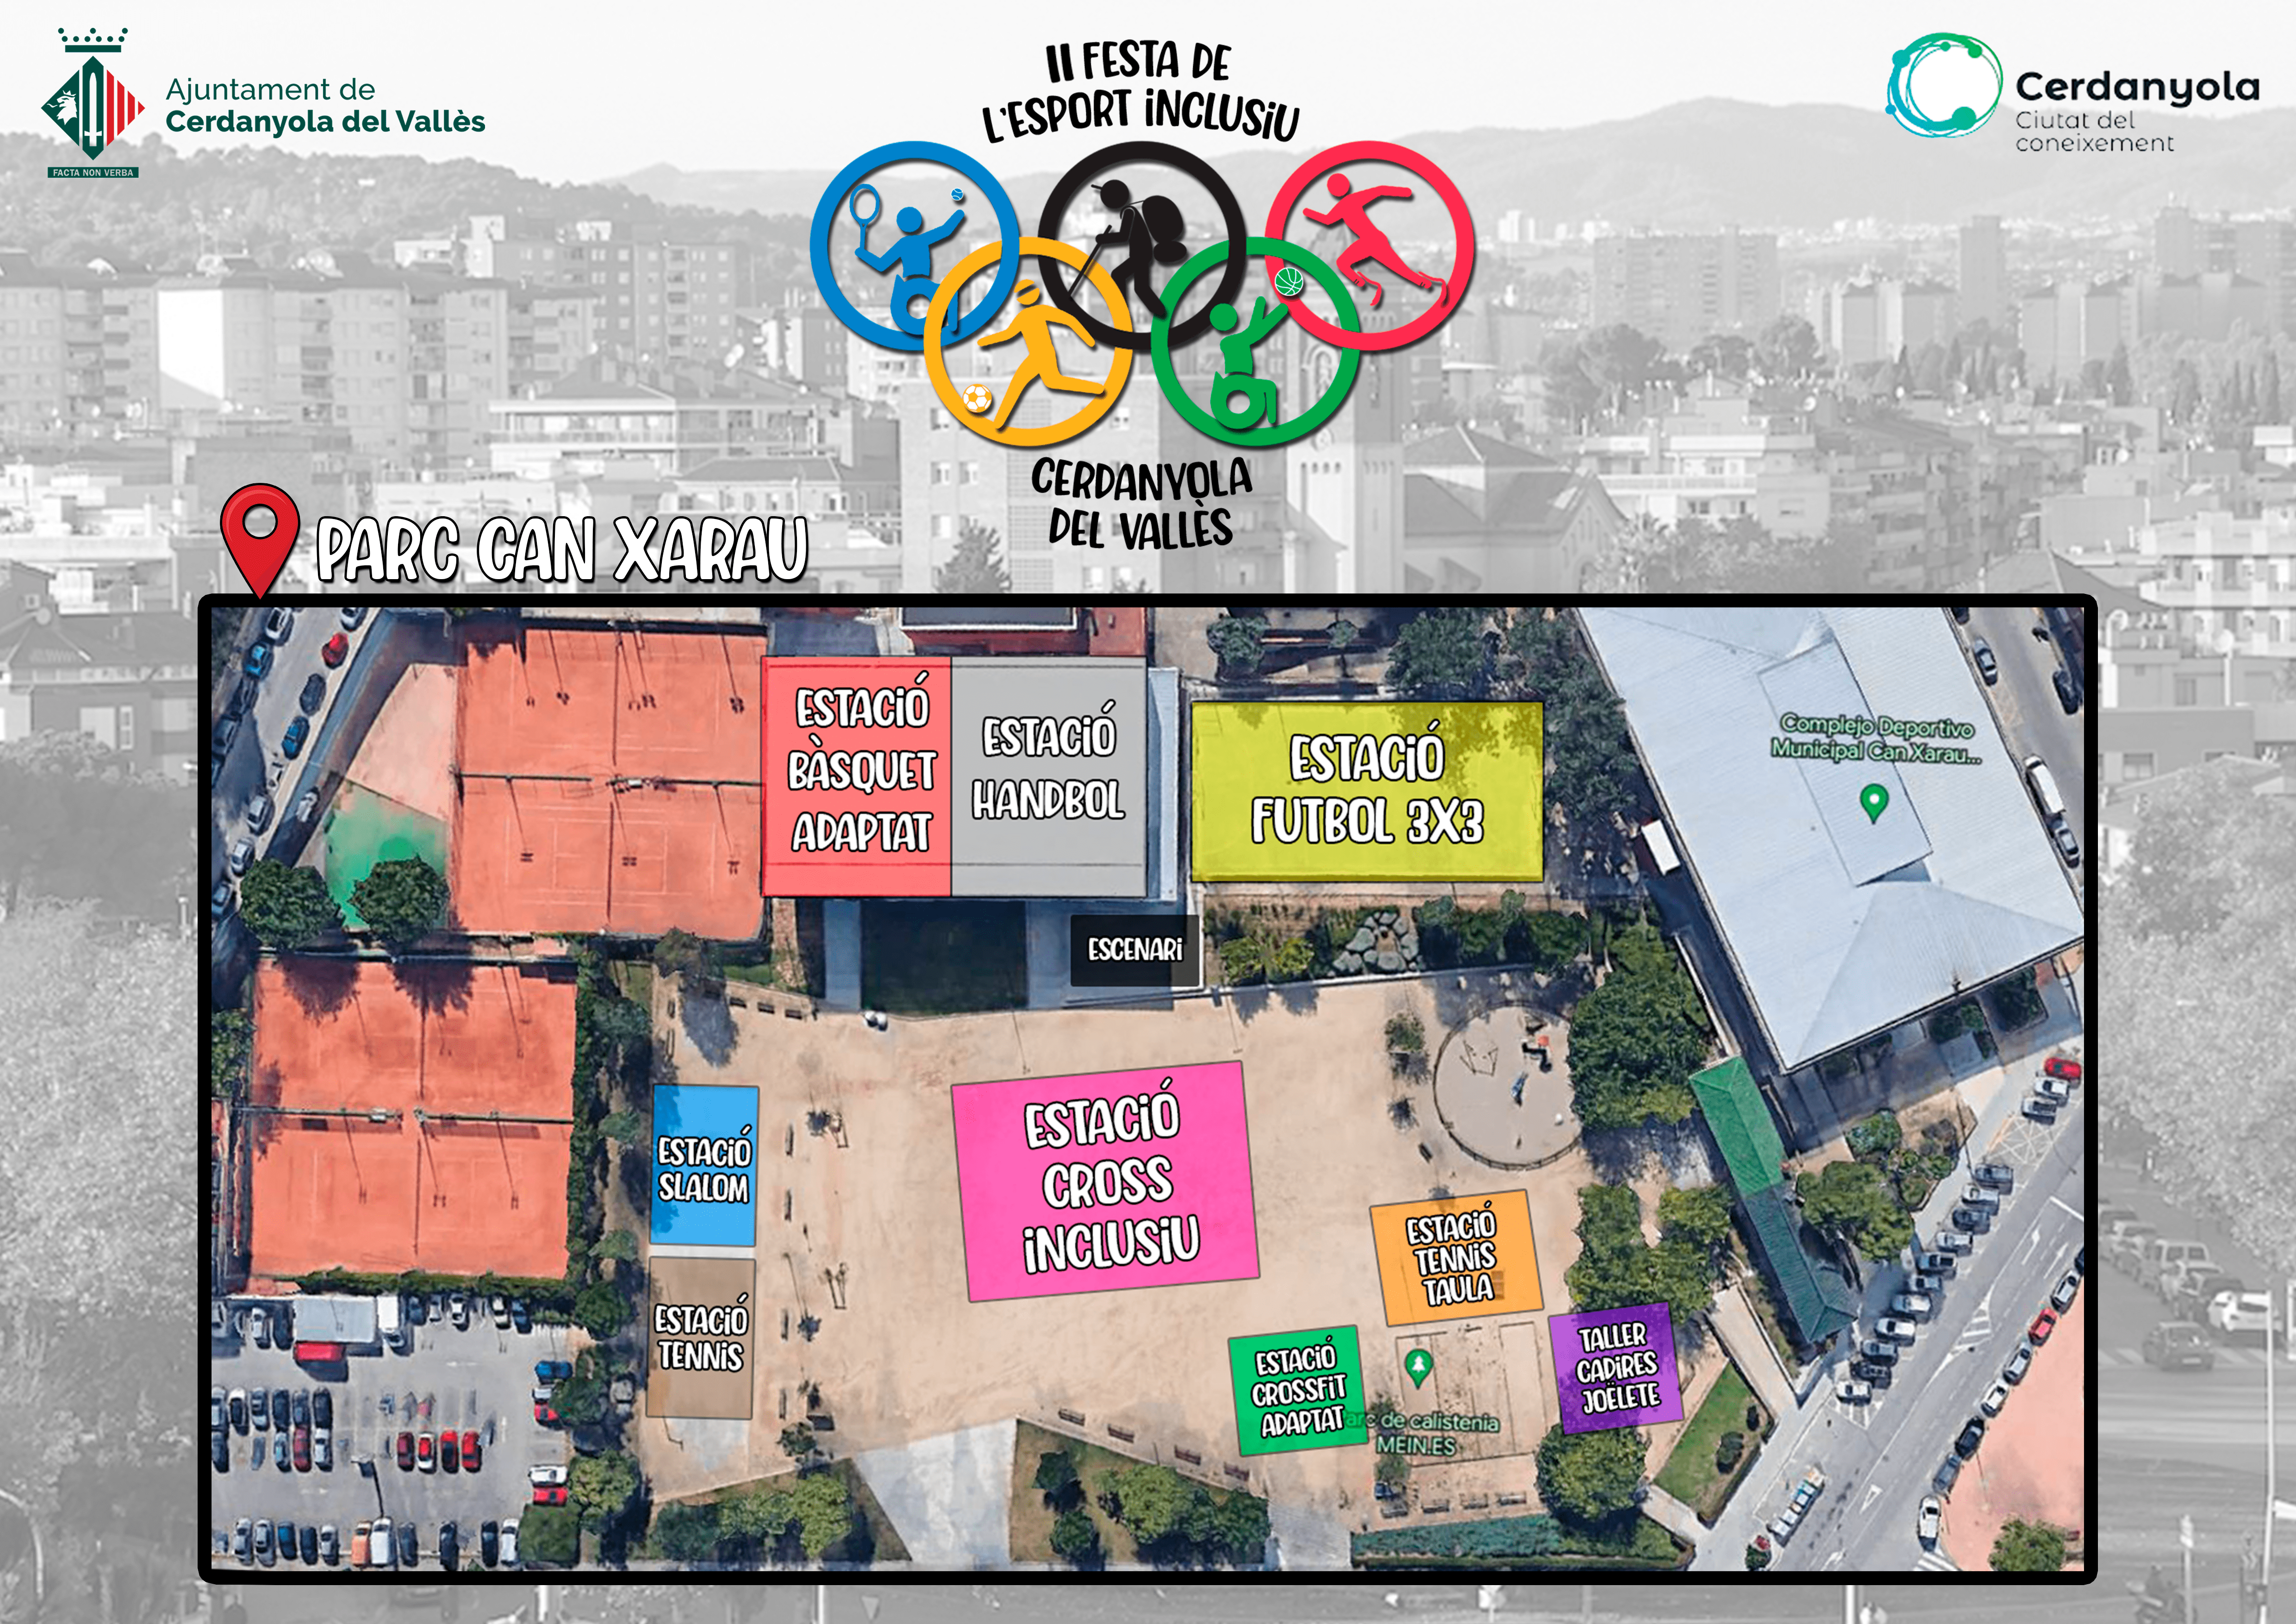 Mapa estacions esportives 2a Festa Esport Inclusiu